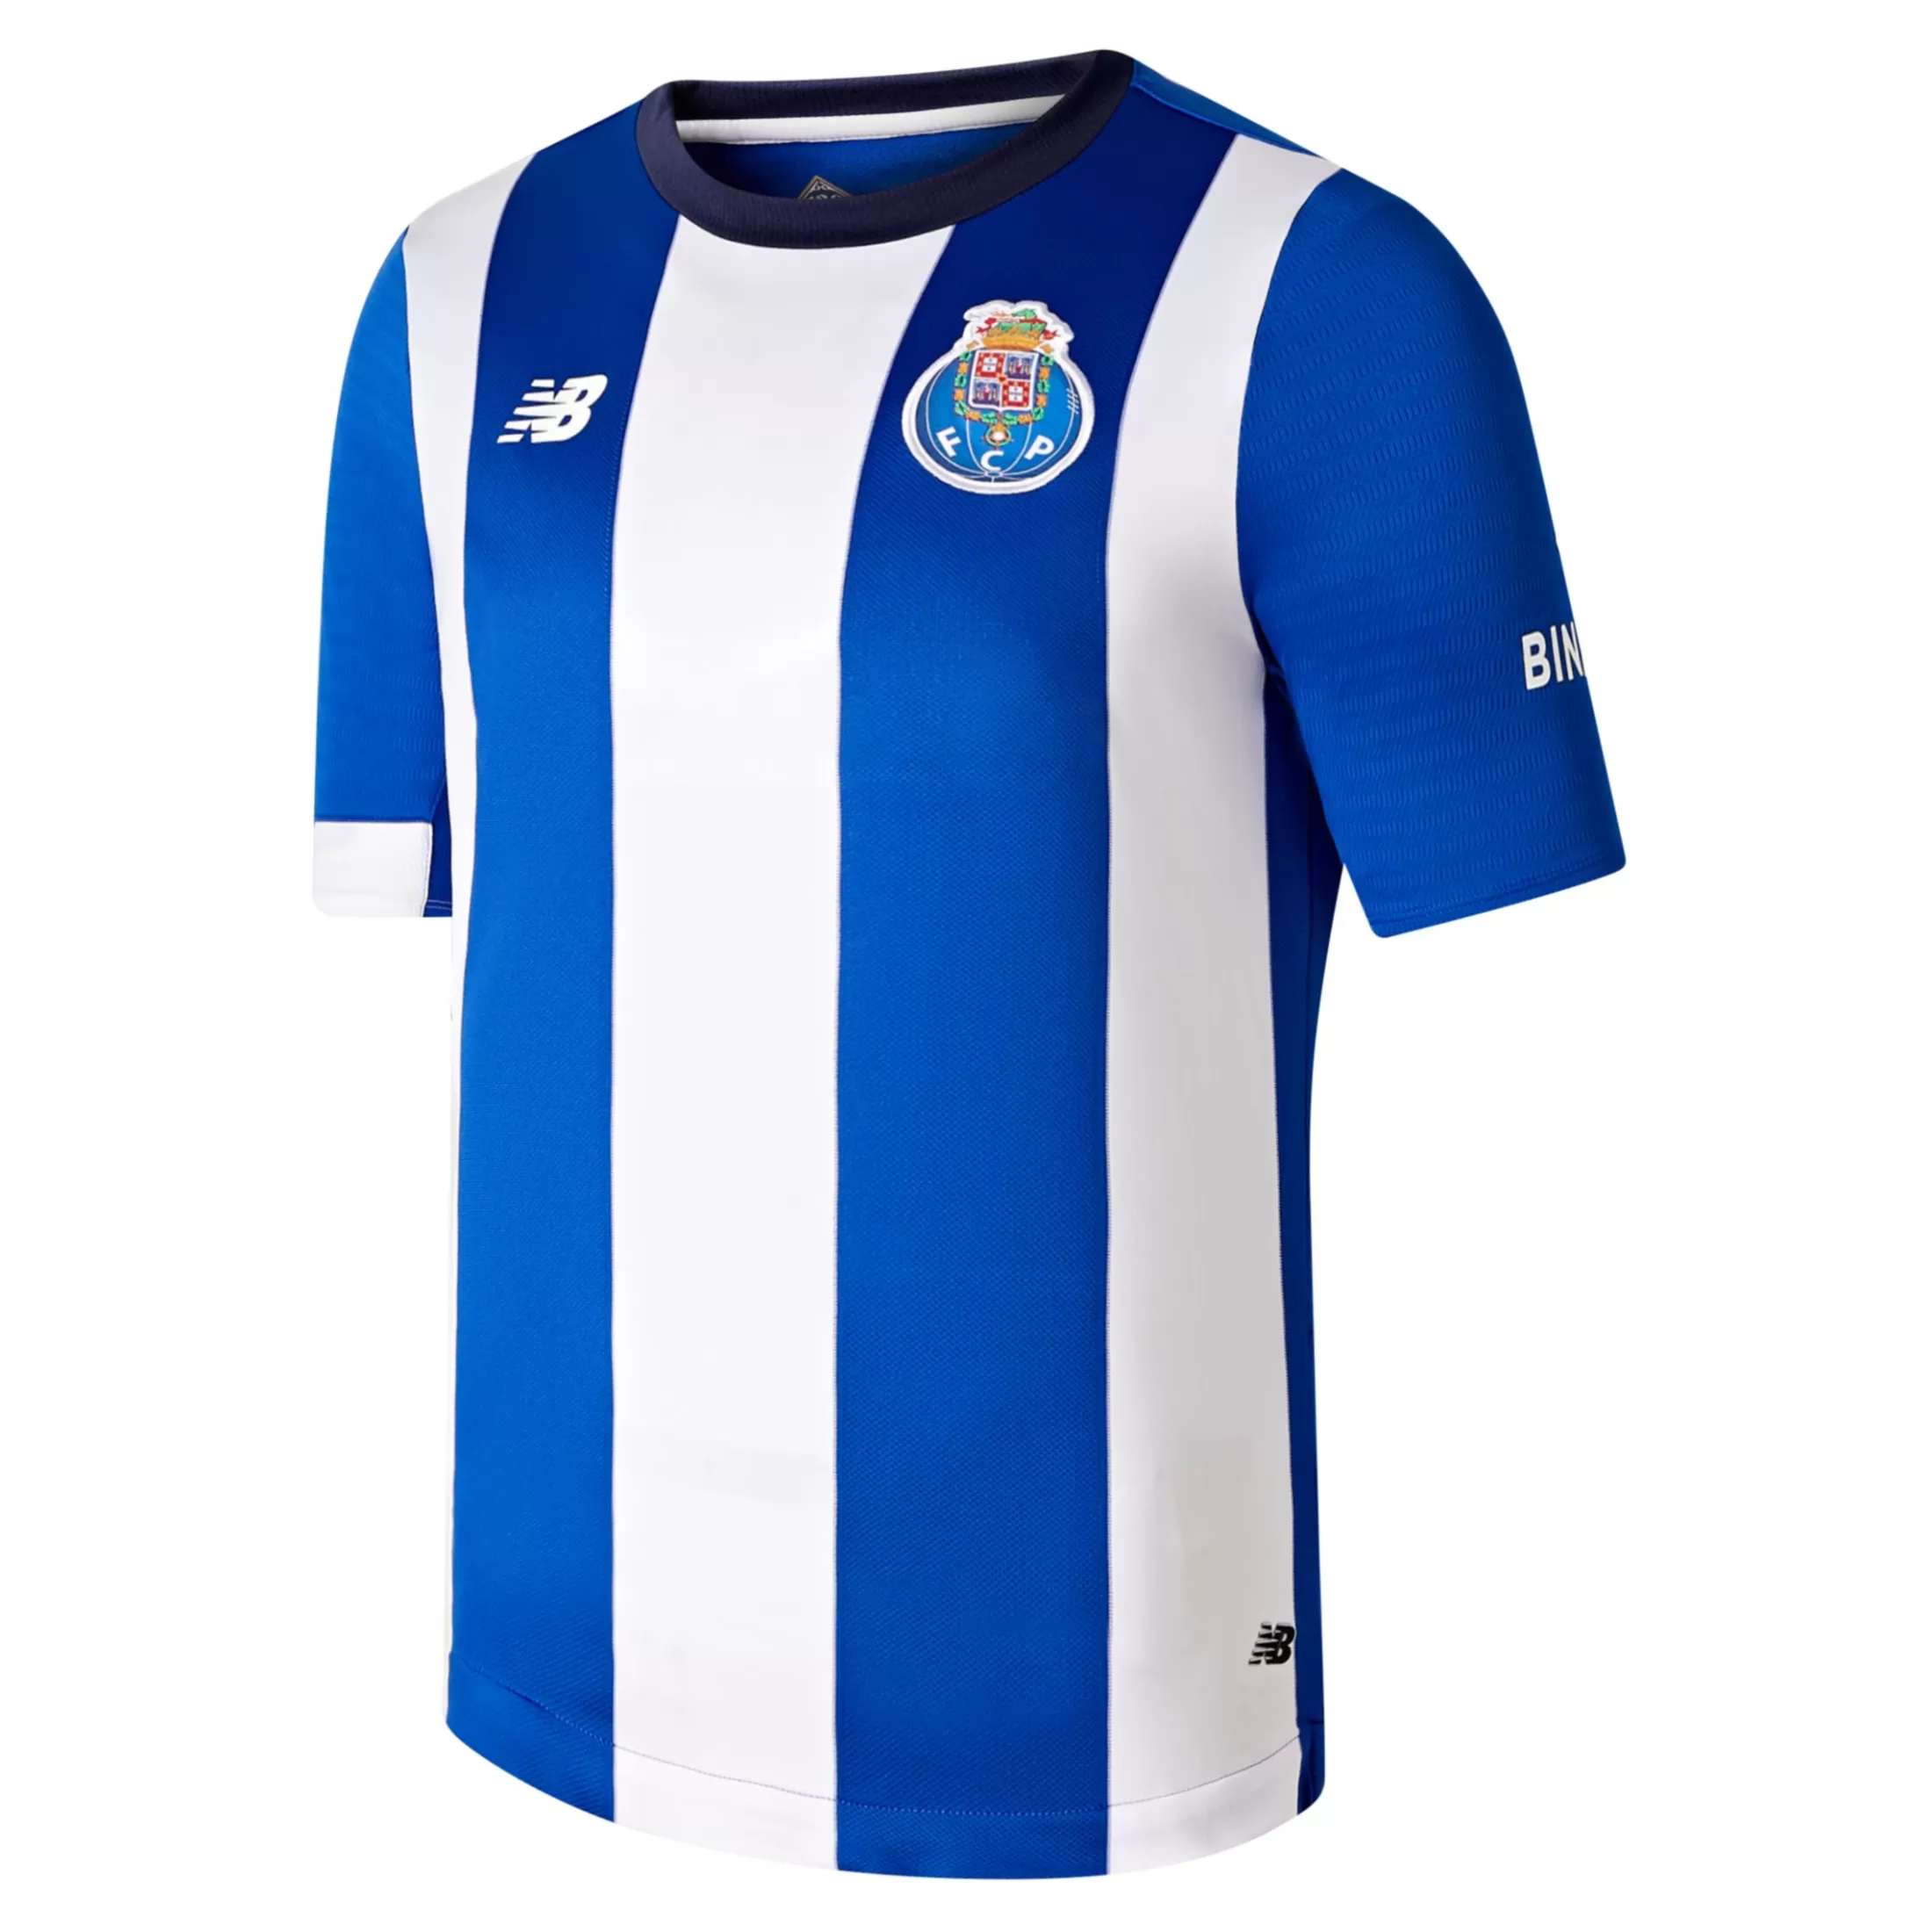 New Criança FC Porto Youth Short Sleeve Jersey Todo o vestuário